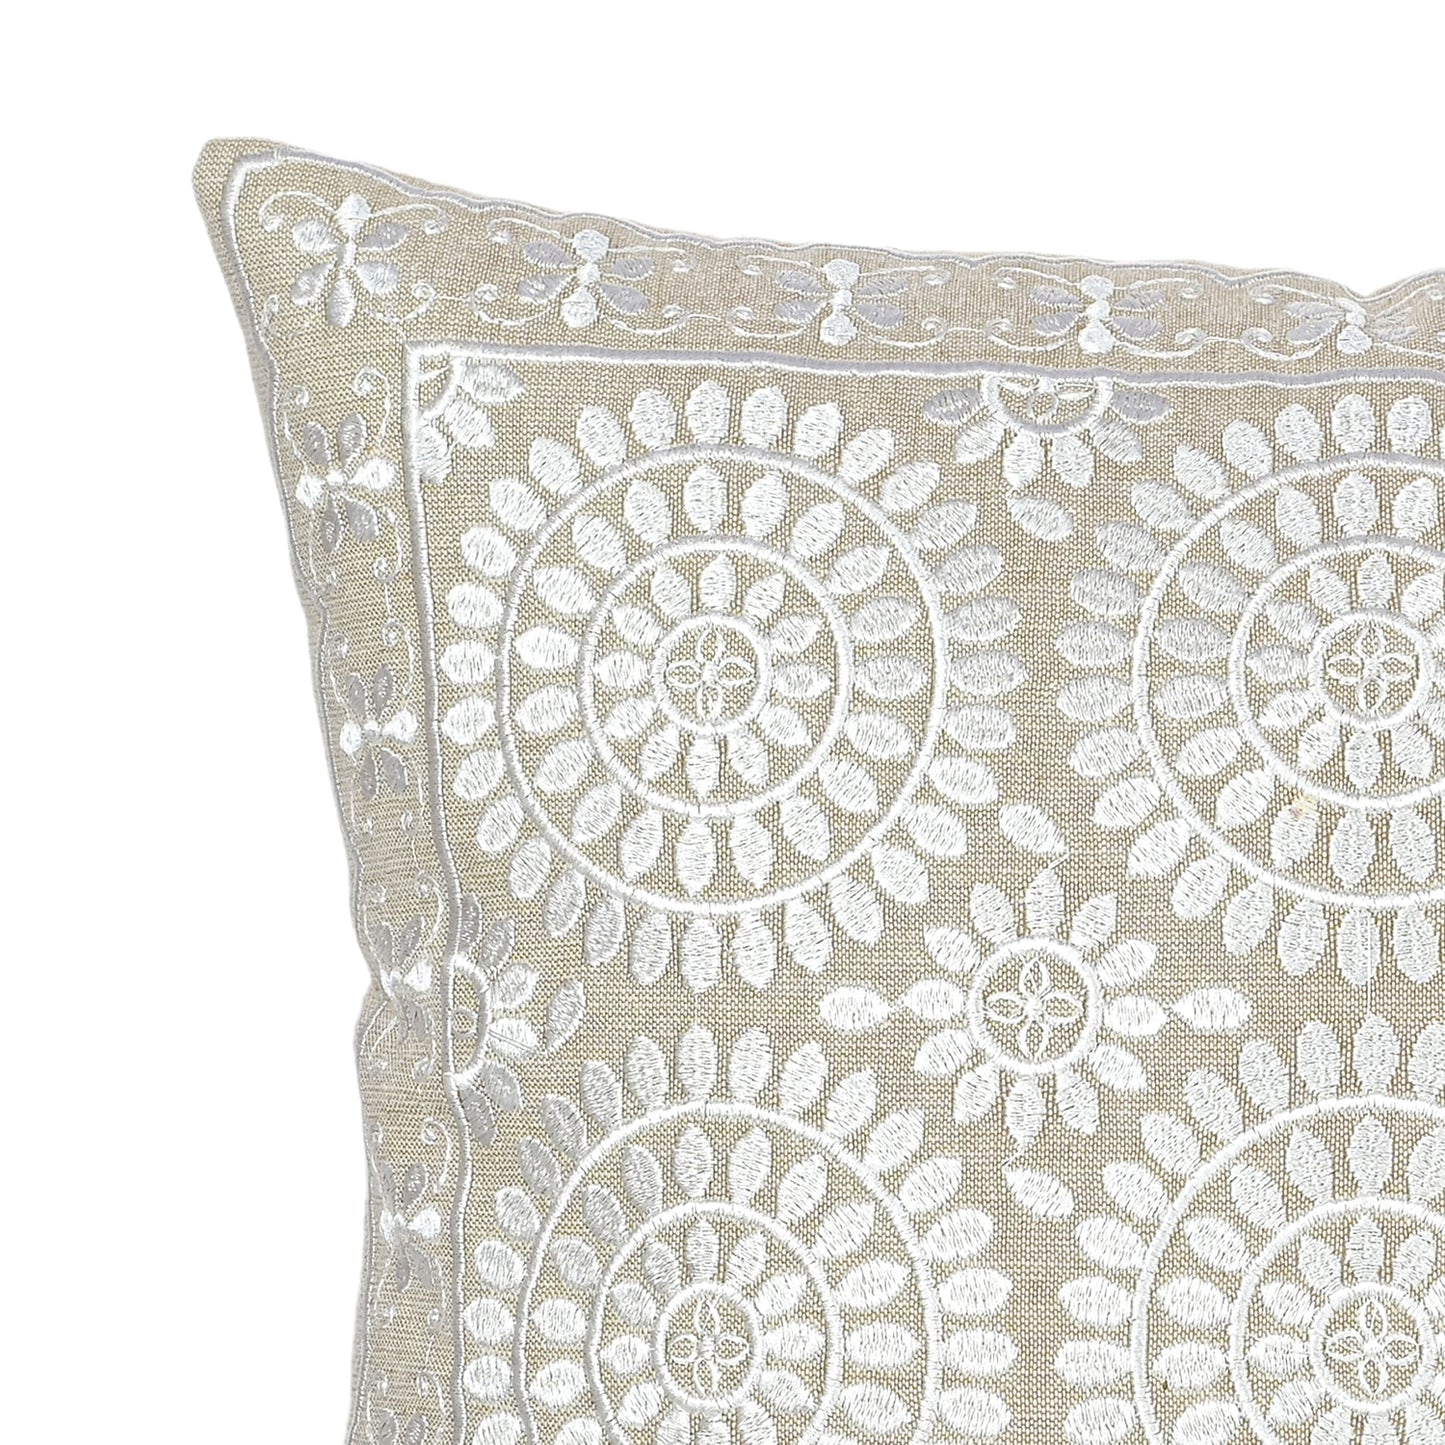 White Geometric Jaipur Throw Pillow Cover - I